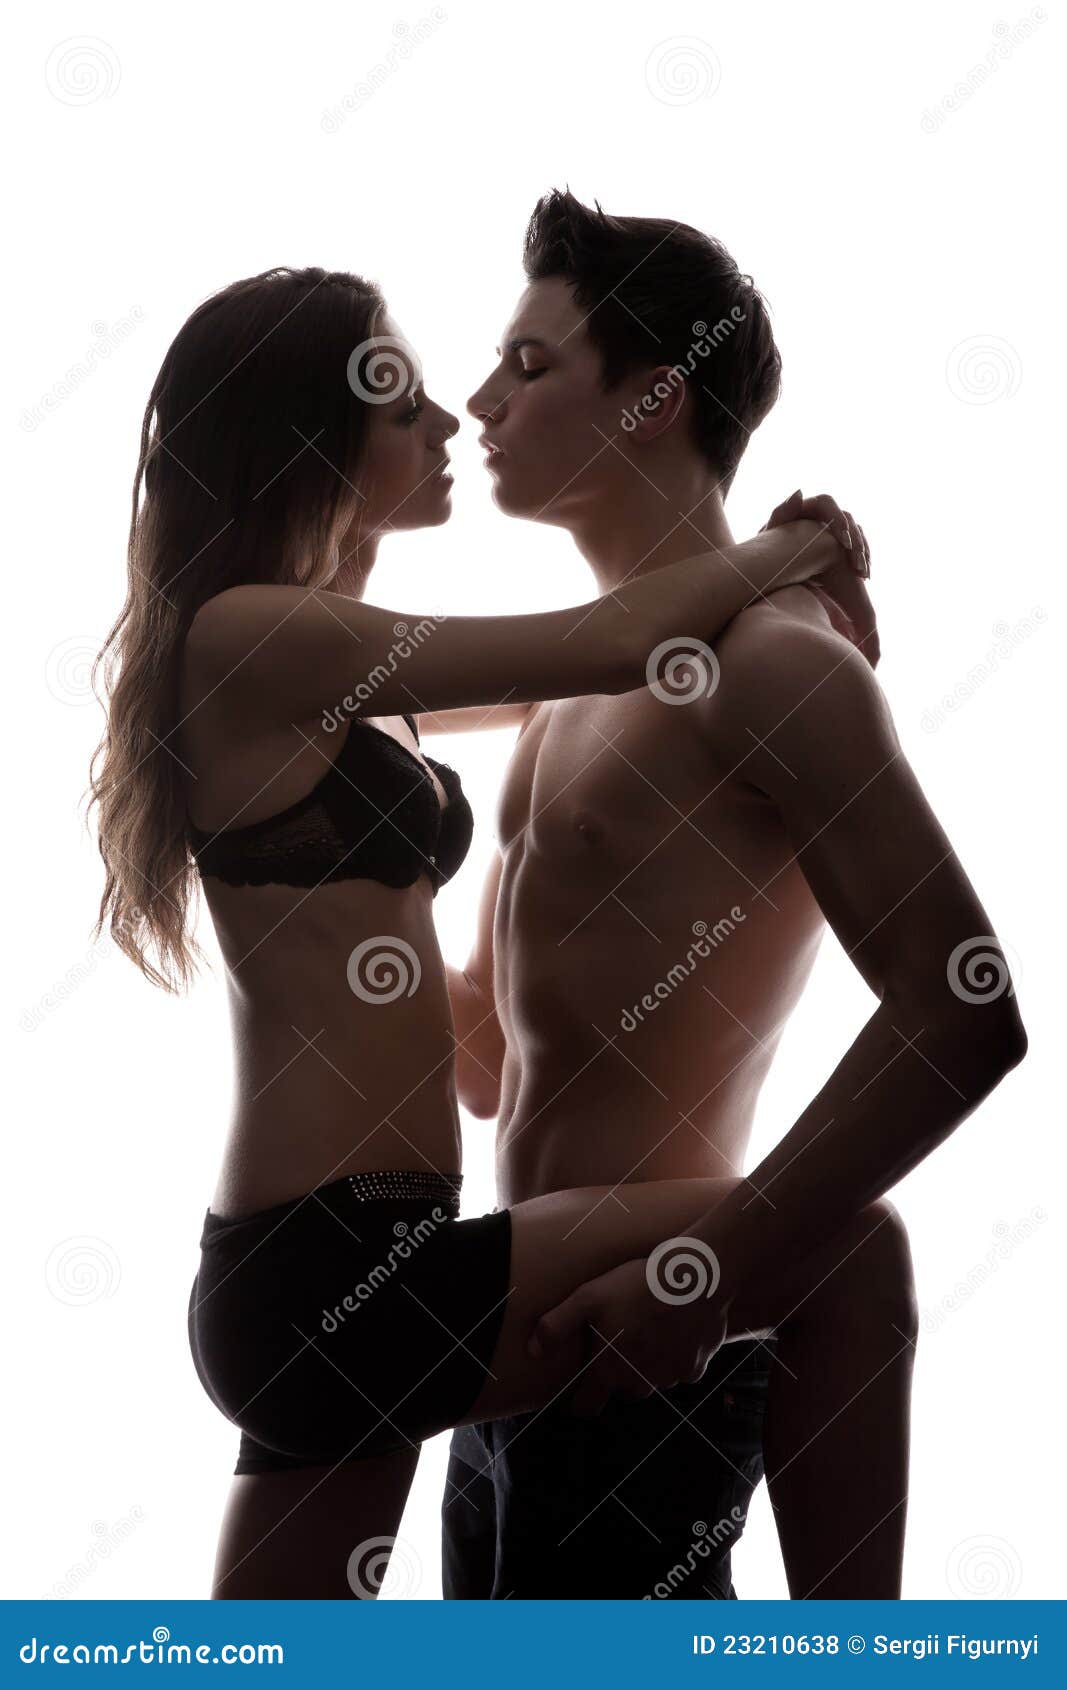 Lesbian bodybuilders kissing